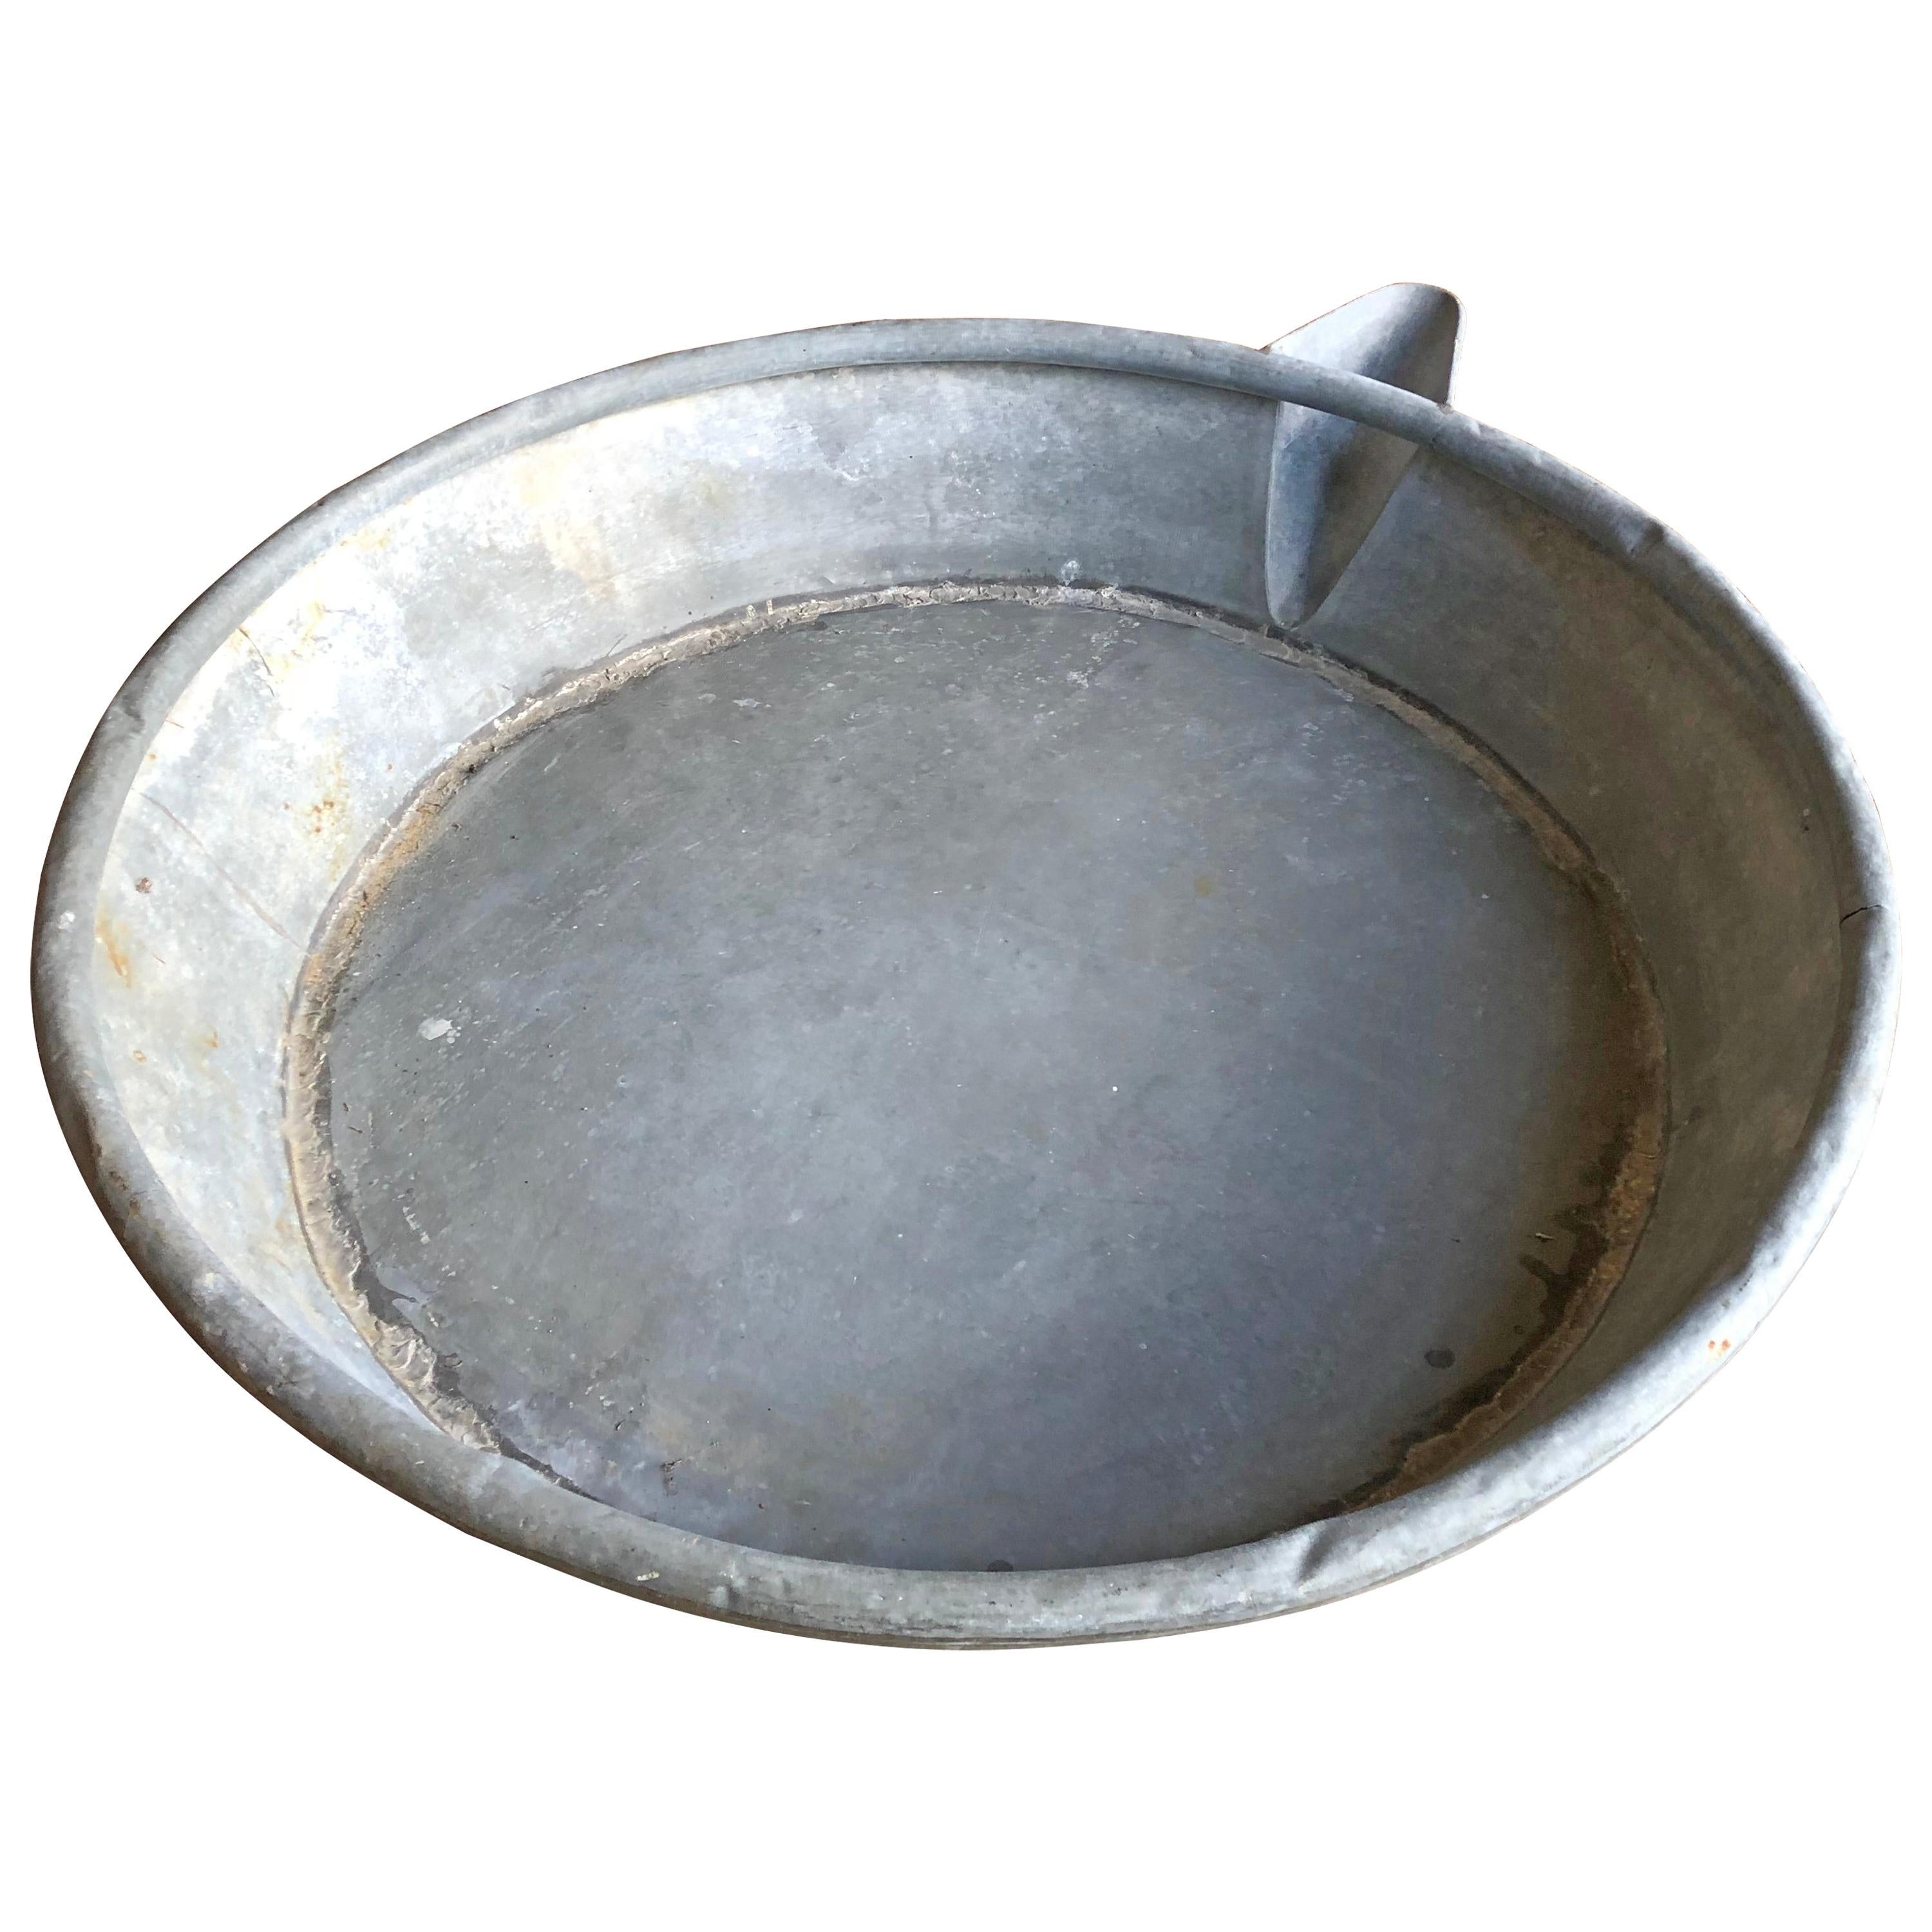 Large Zinc Pan, 19th Century